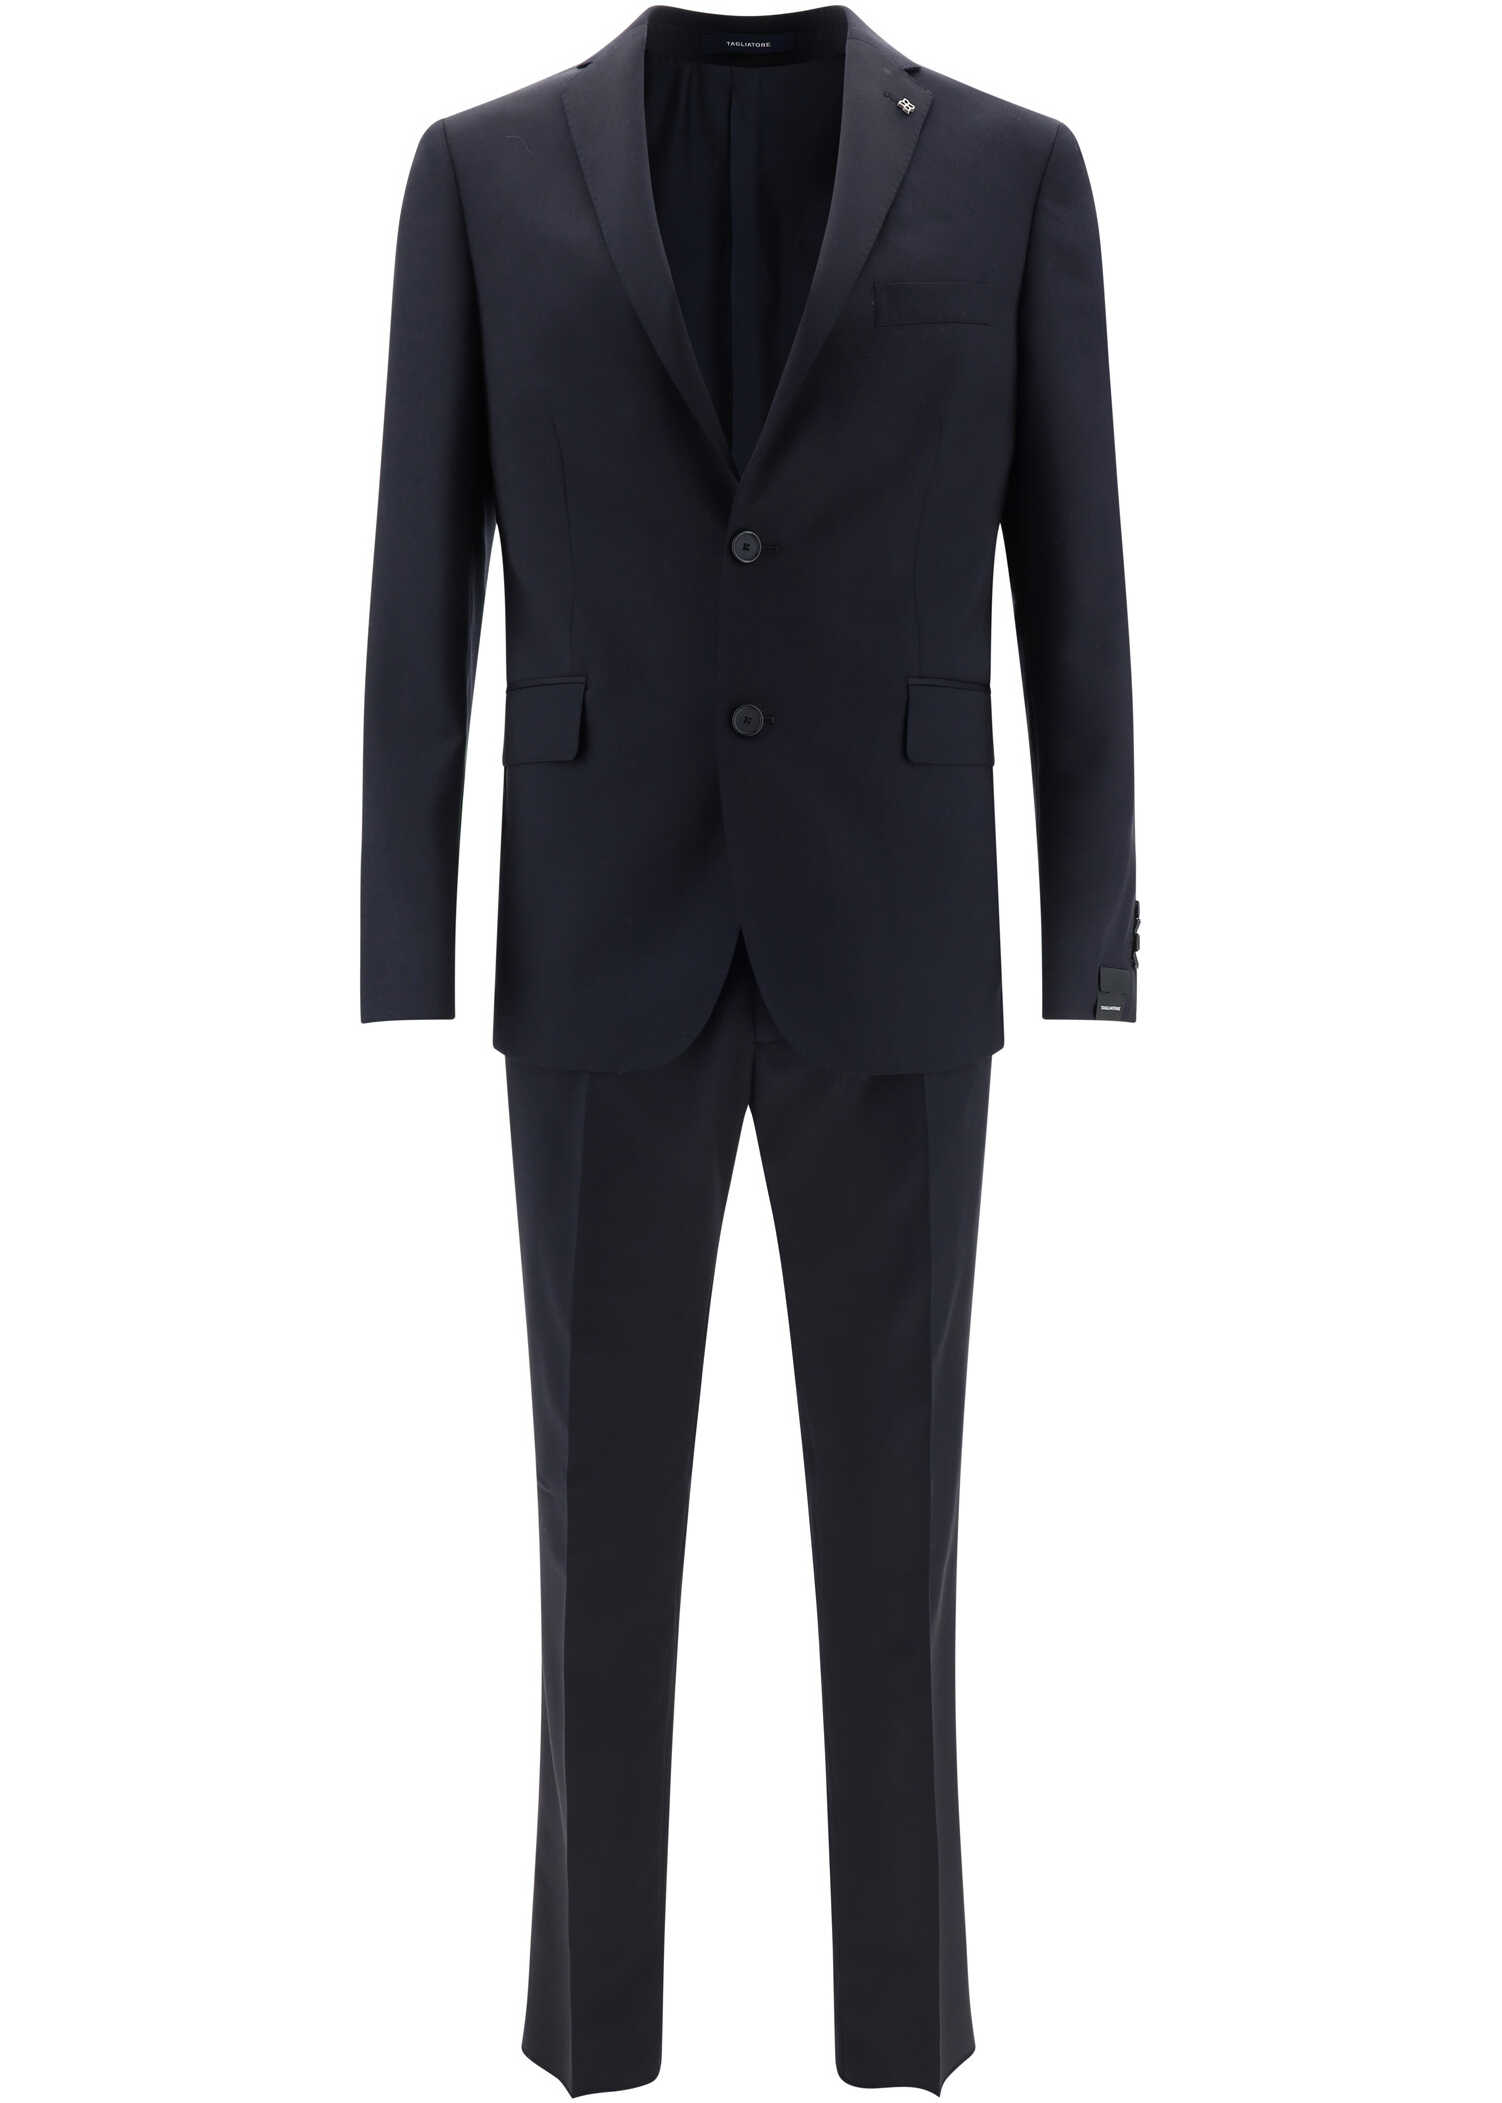 Tagliatore Complete Suit B5013 b-mall.ro